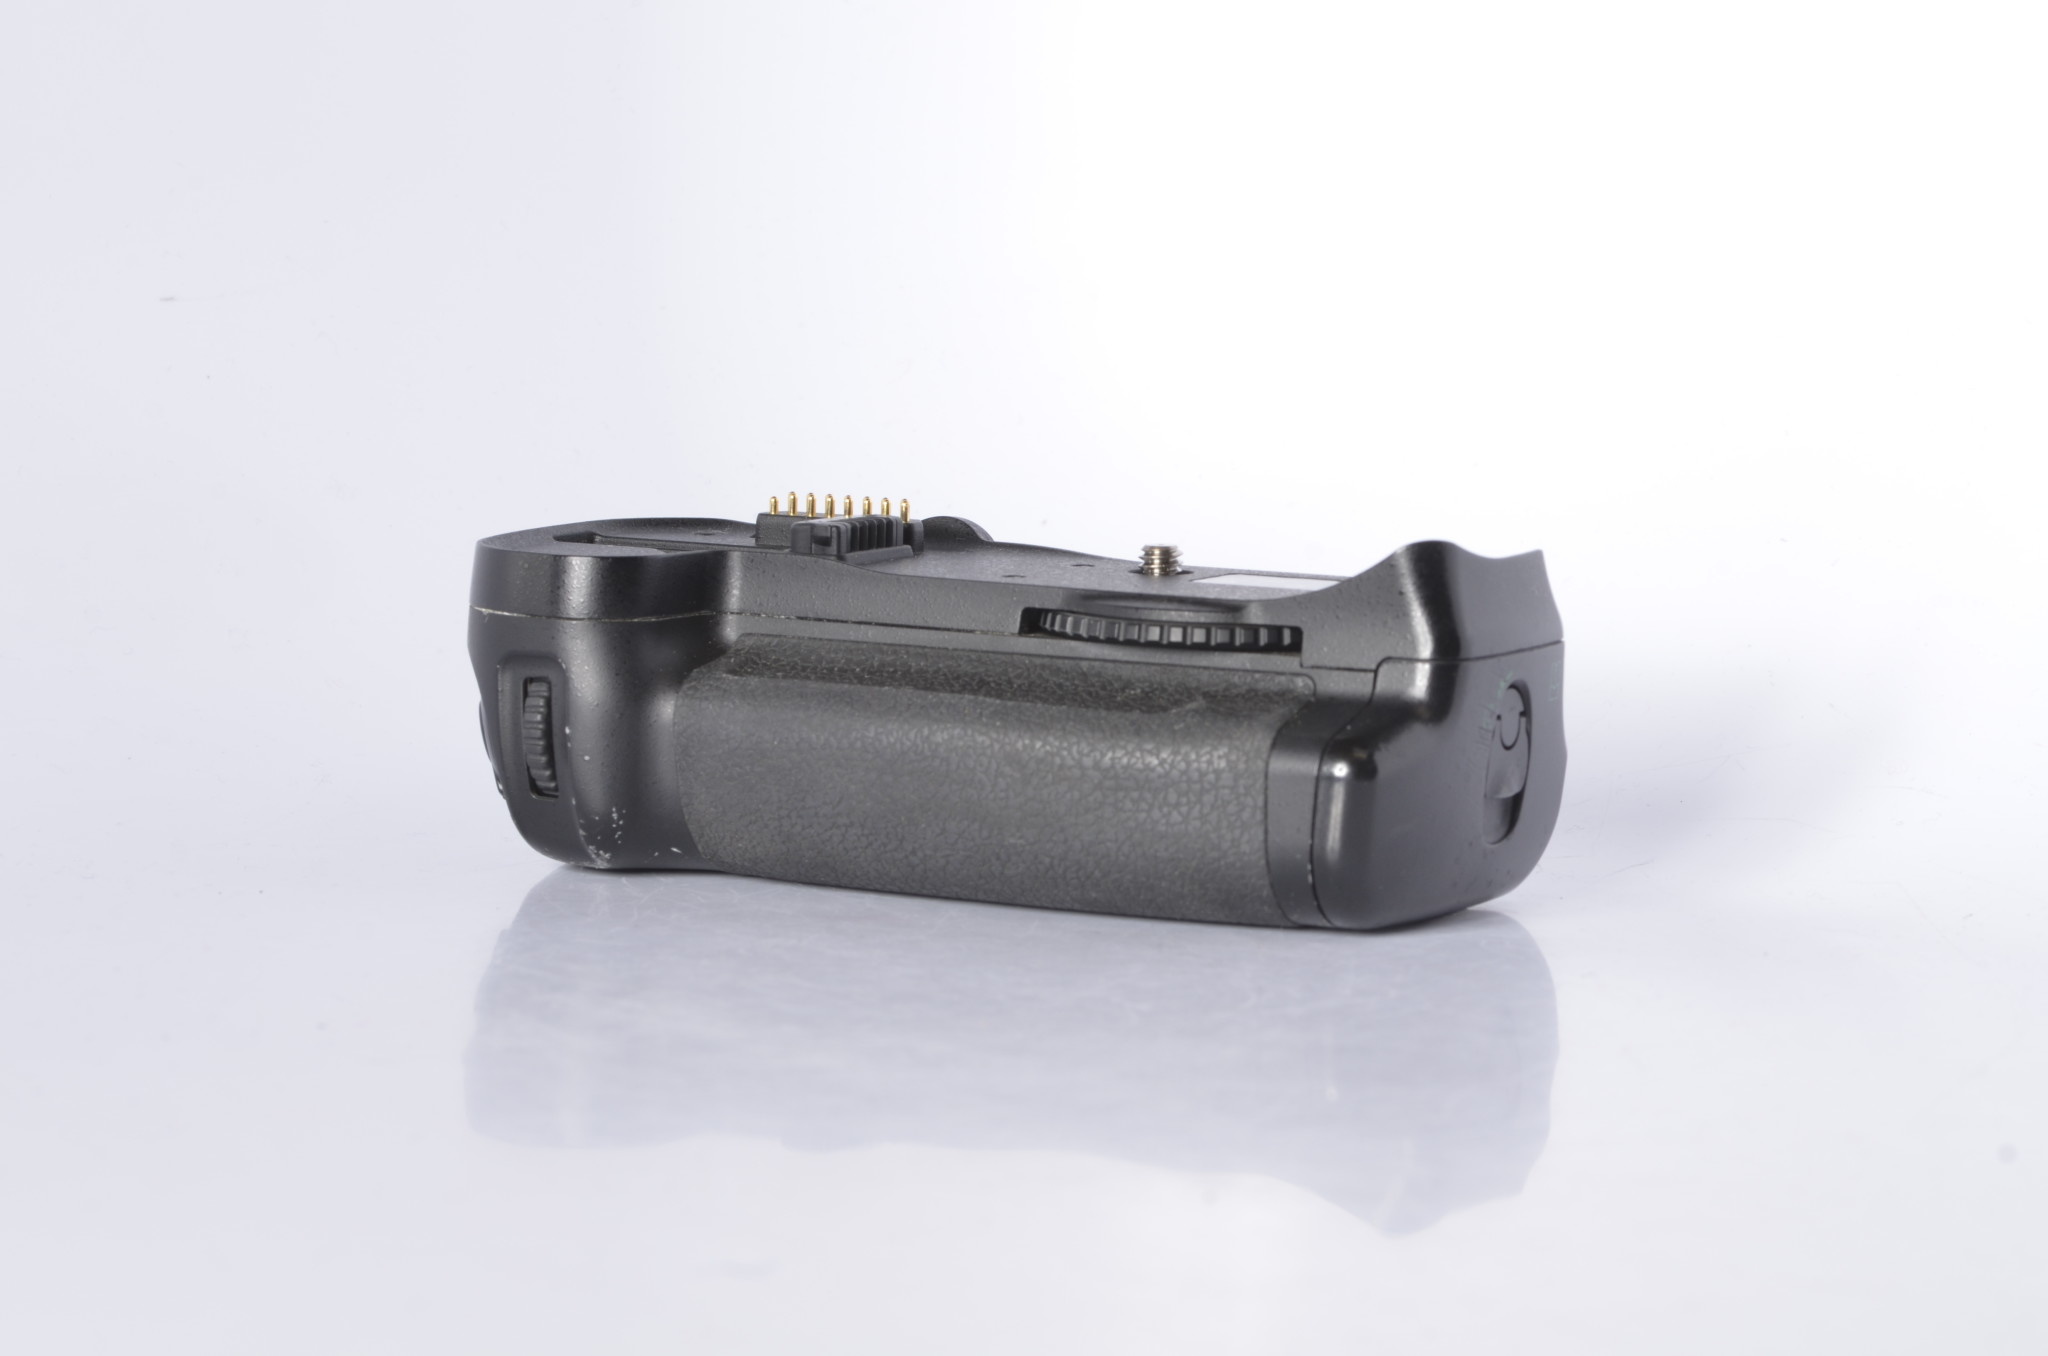 Nikon MB-D10 Multi Function Battery Pack for D700, D300, D300s